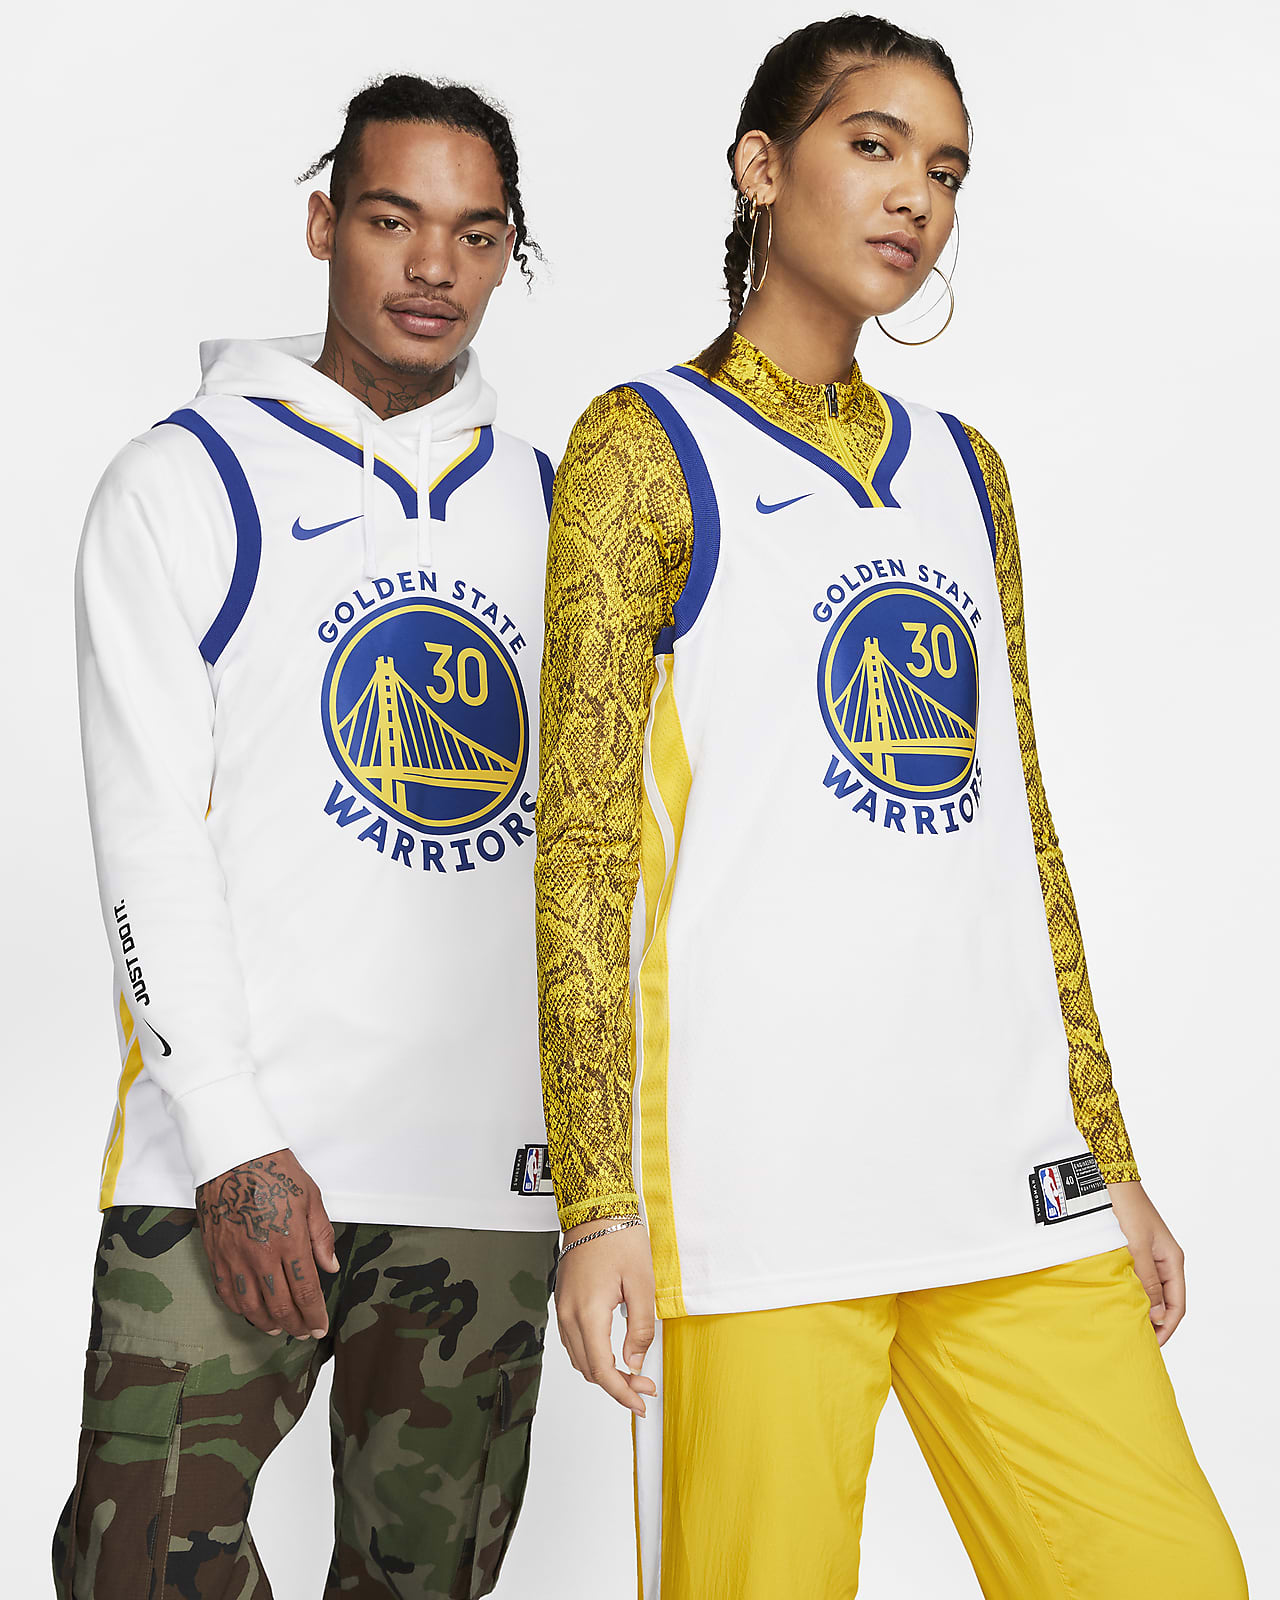 金州勇士队 (Stephen Curry) Association Edition Nike NBA Jersey 男子球衣